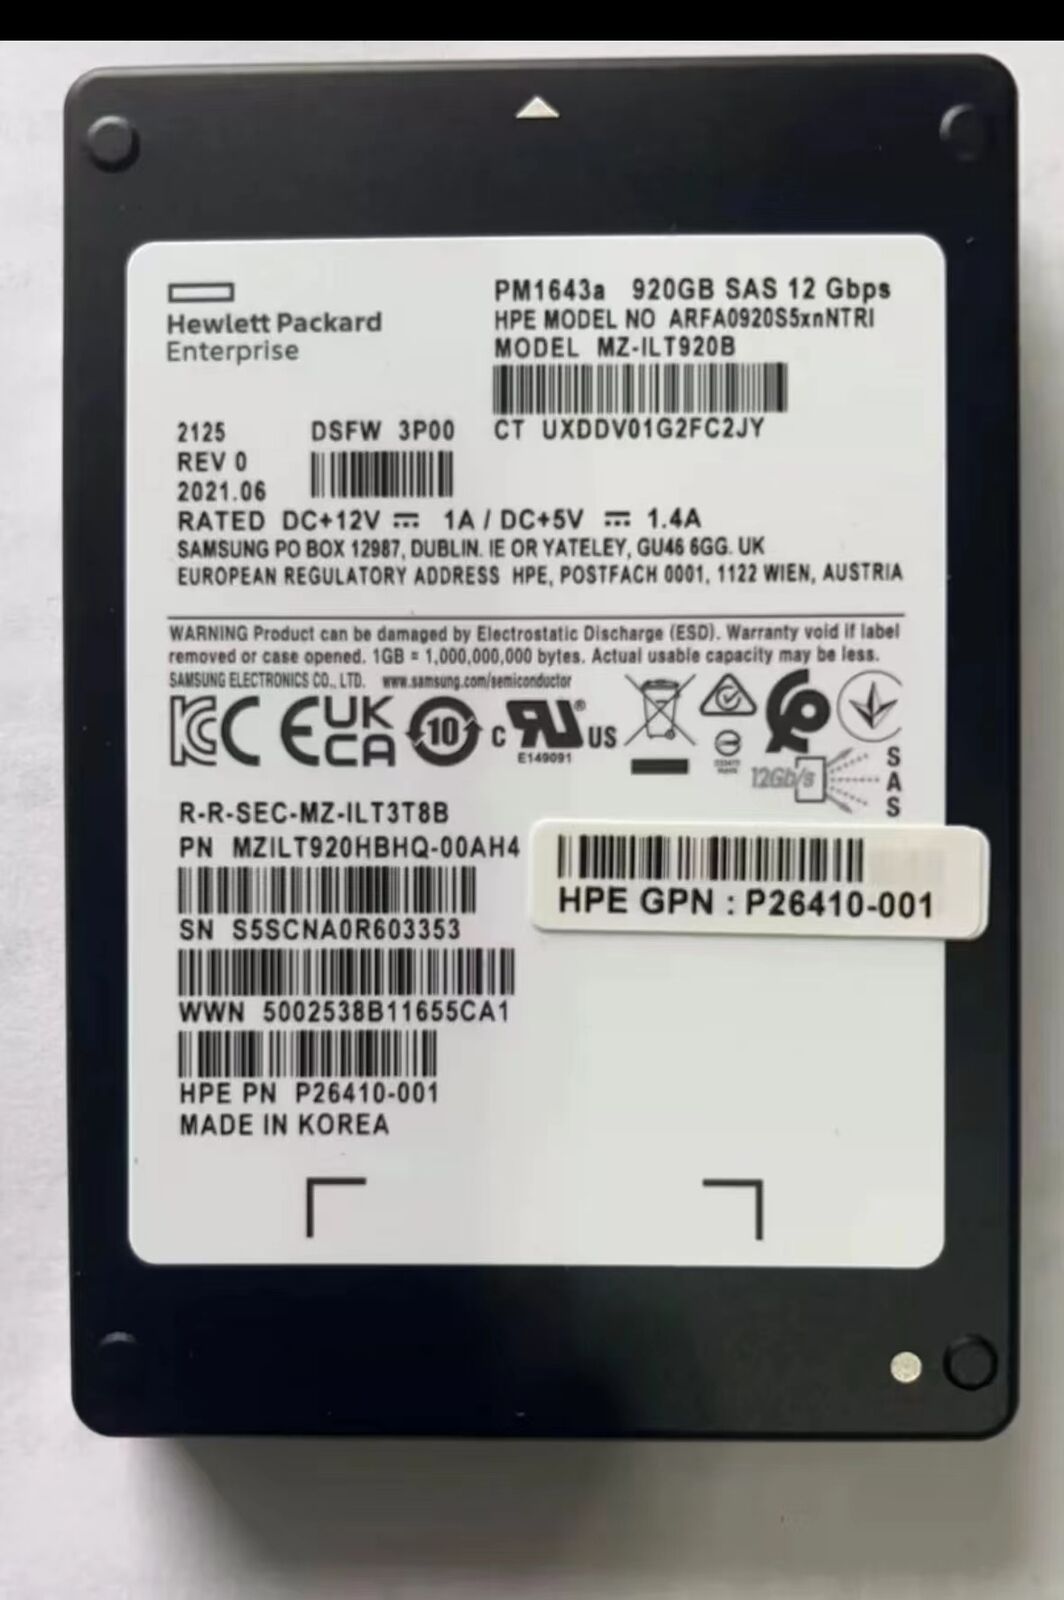 Samsung PM1643a 920GB SSD SAS 12Gbps MZ-ILT920B HPE  ARFA0920S5xnNTRI DSFW 3P00